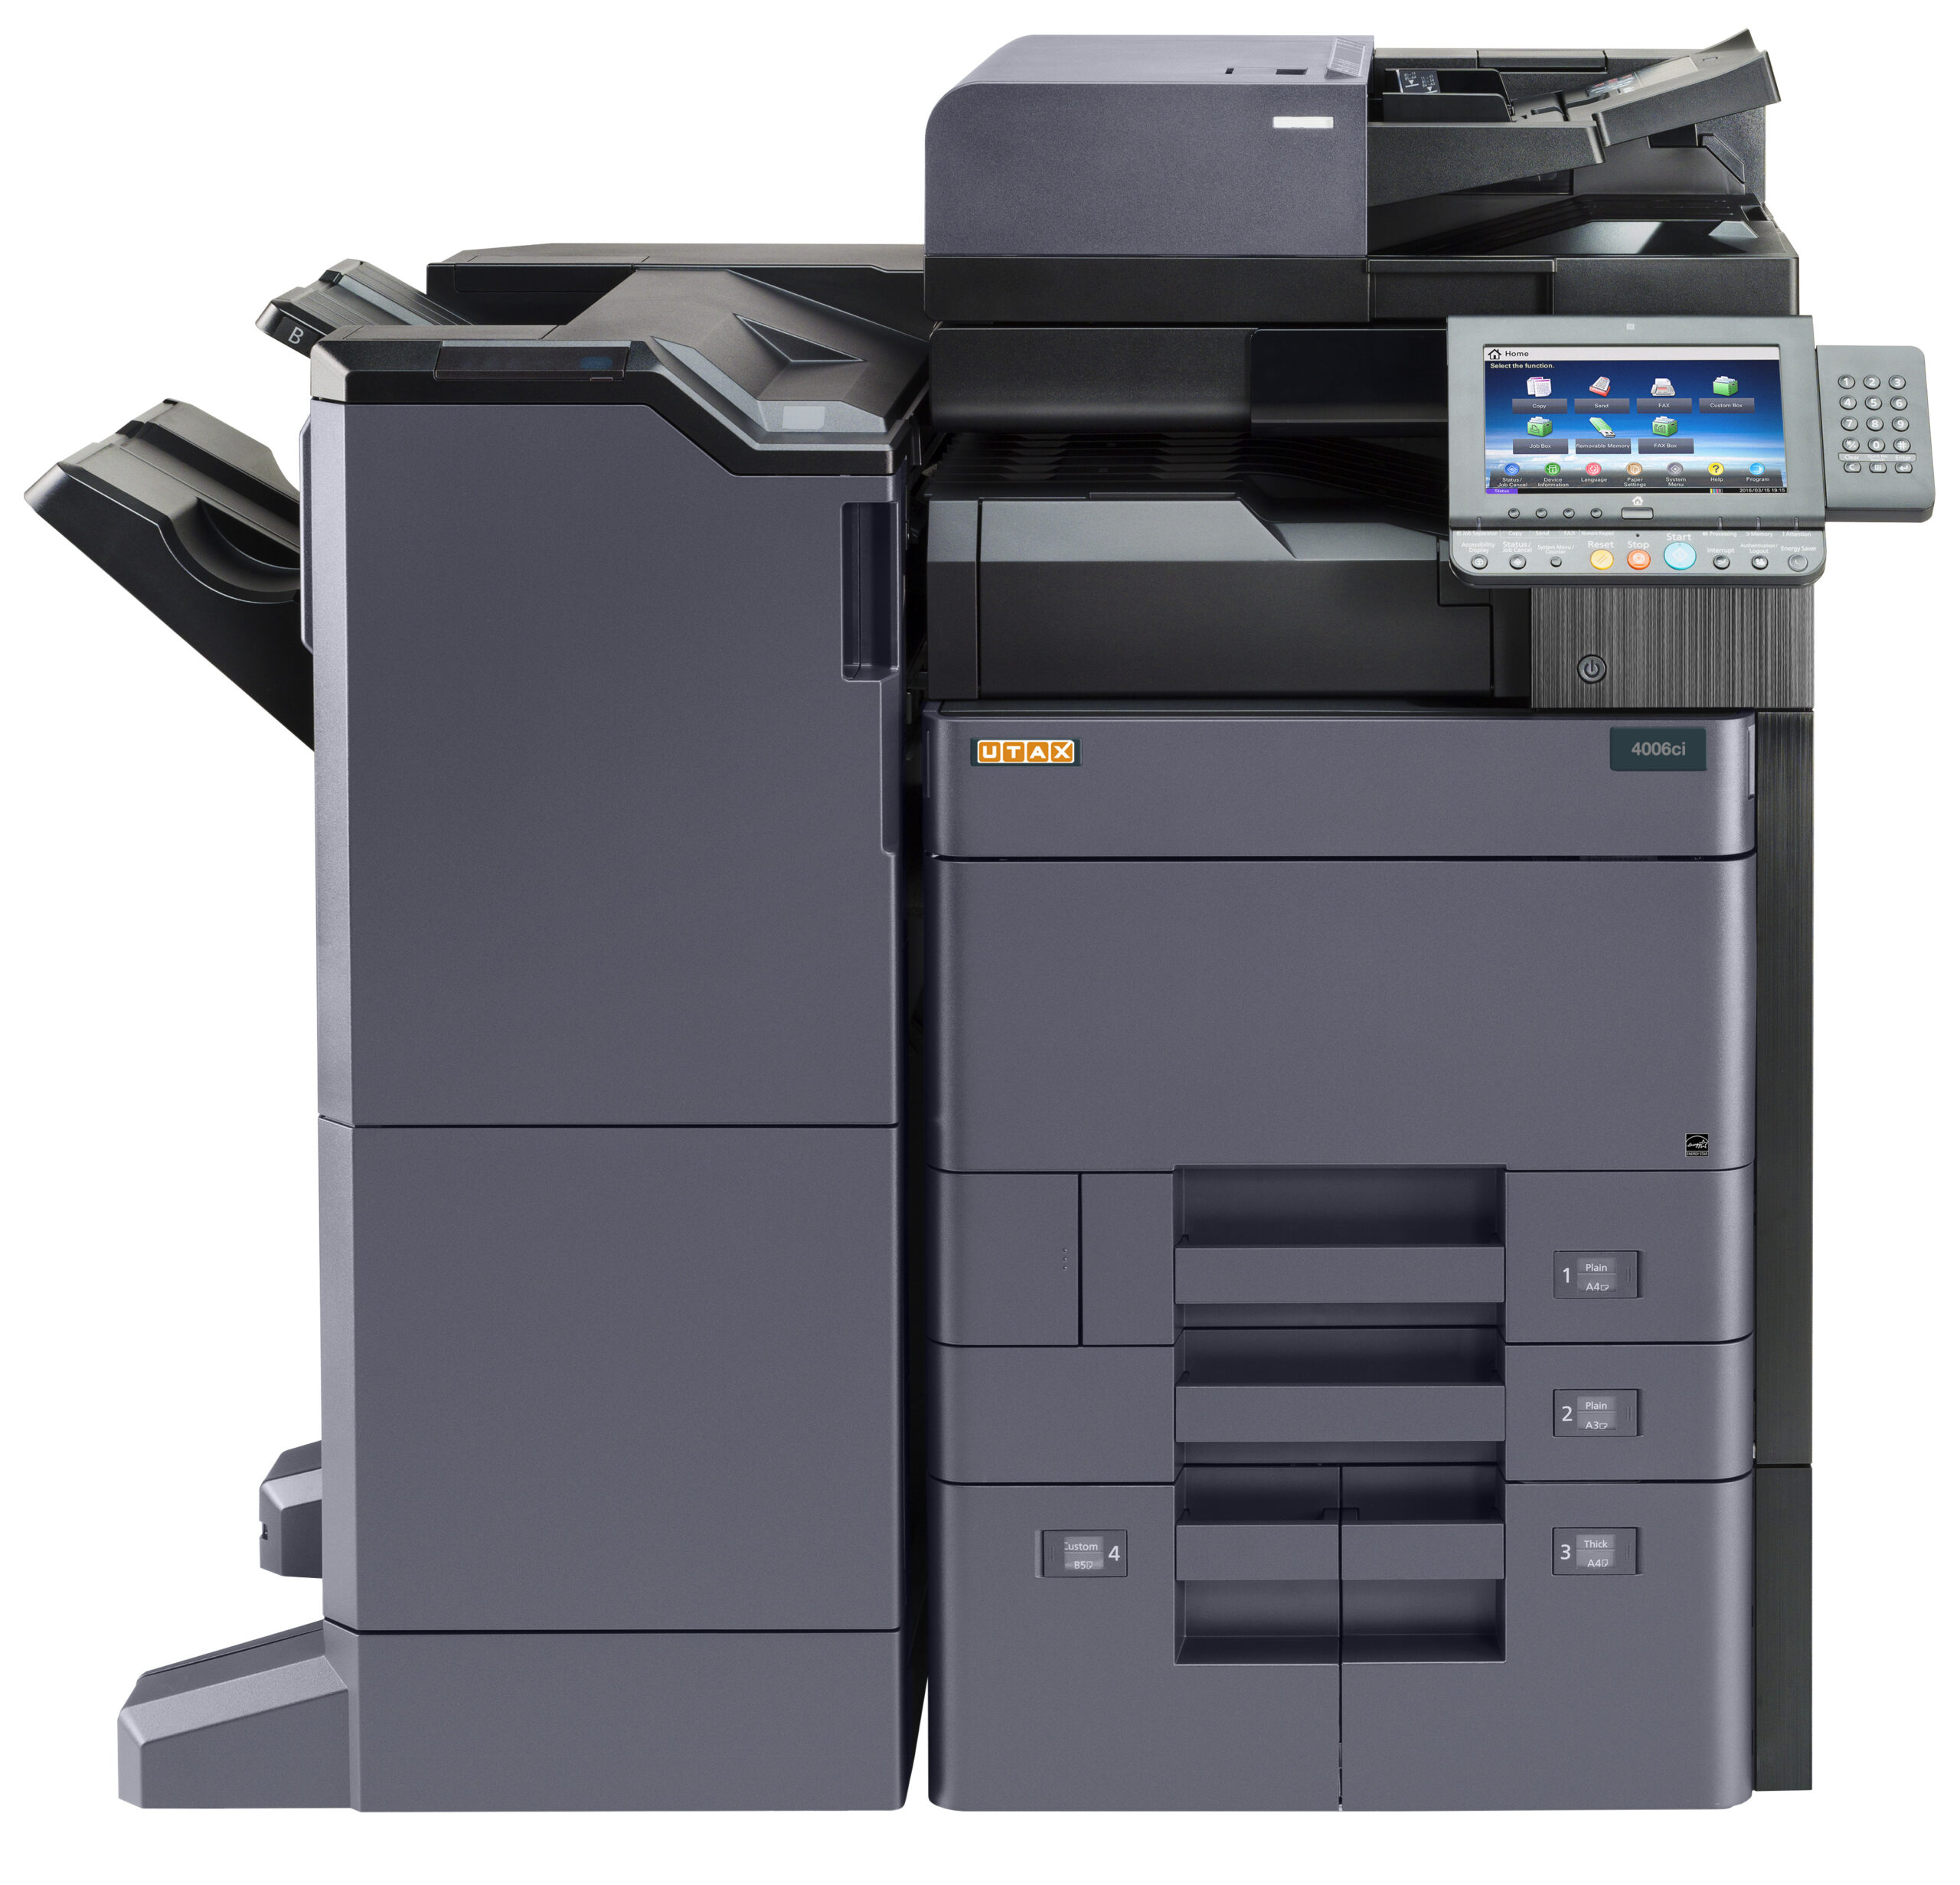 UTAX Printers